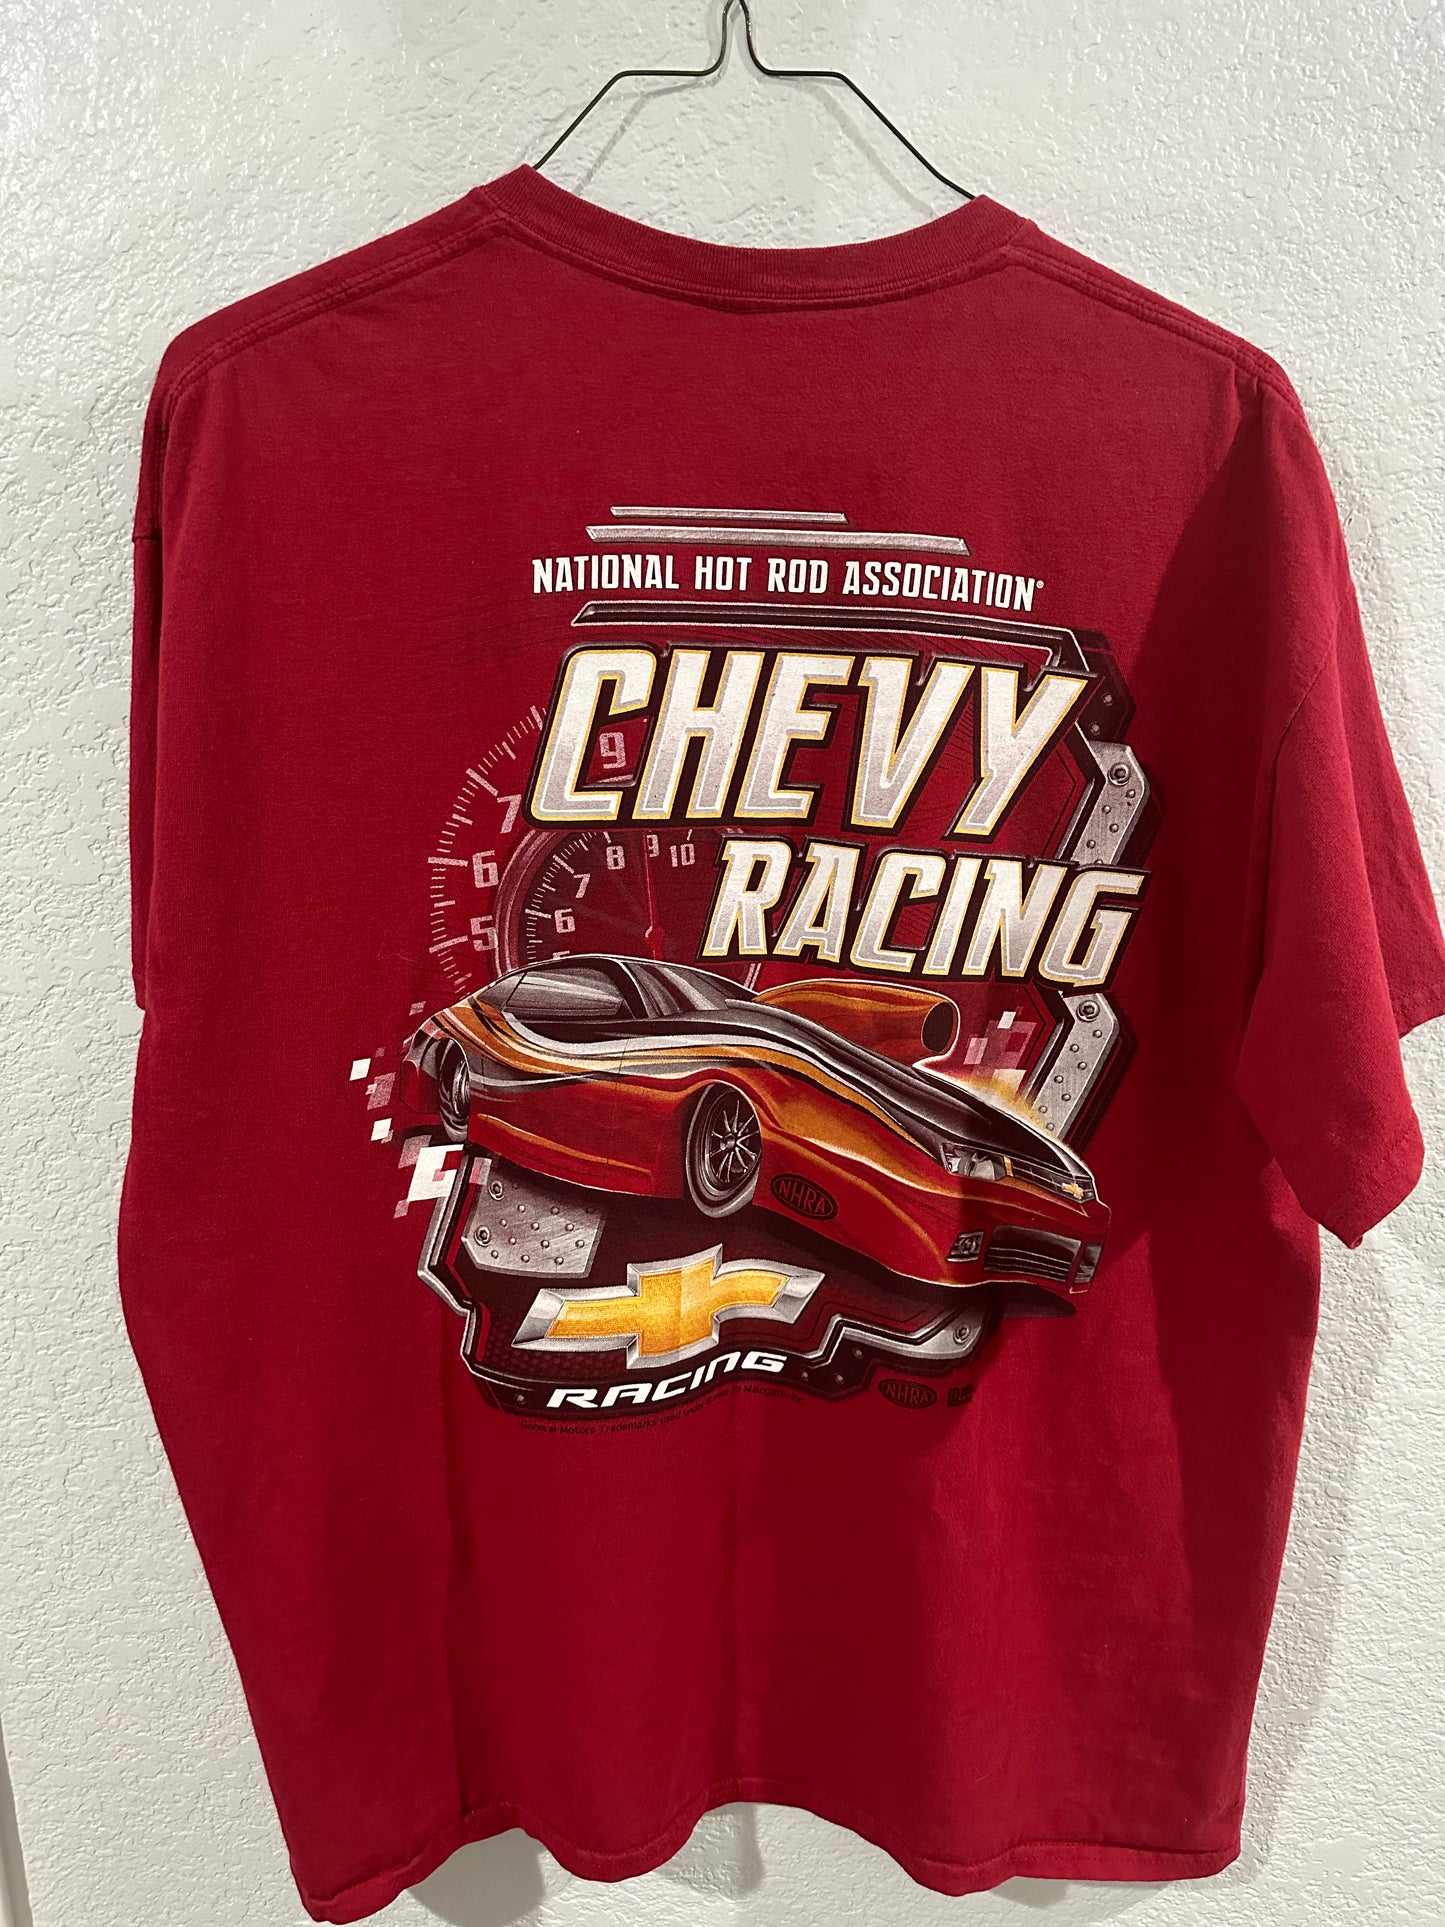 Chevy racing tee